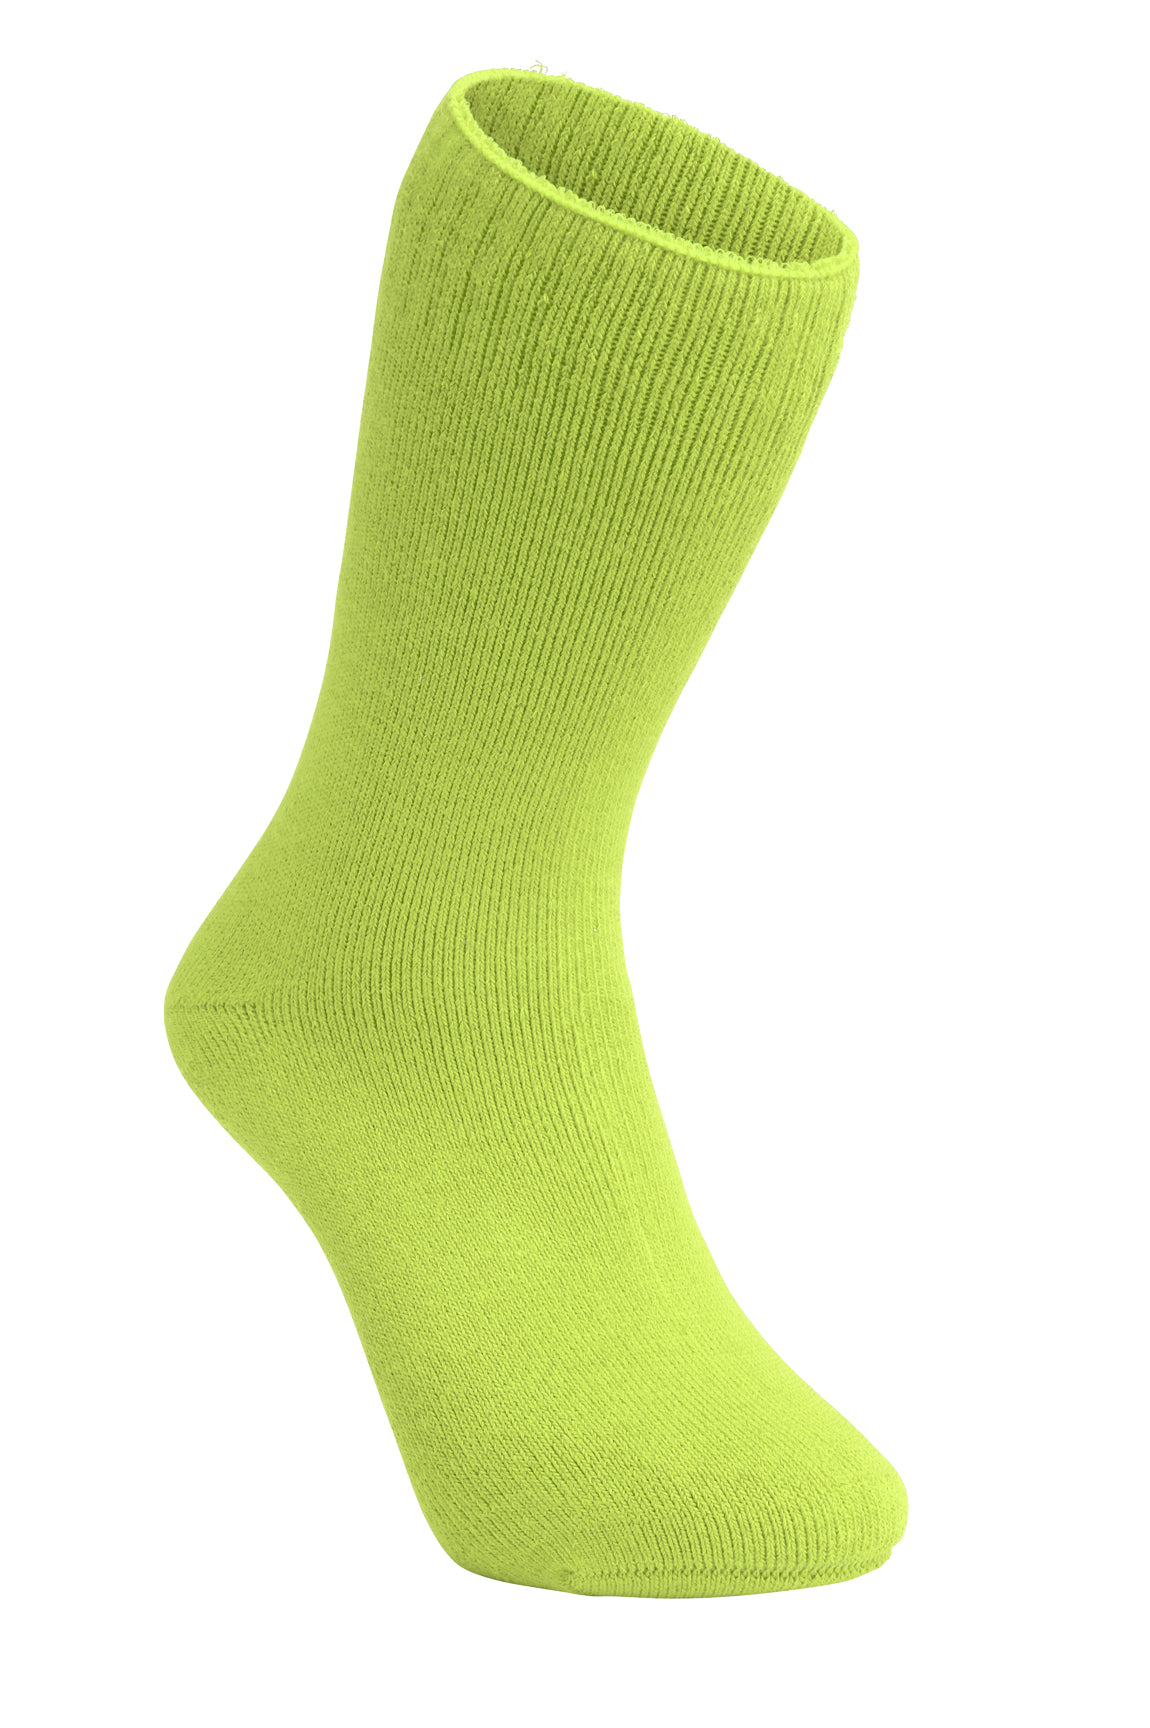 3 Peaks Bamboo Comfort Socks [Sz:3-8 Clr:YELLOW]